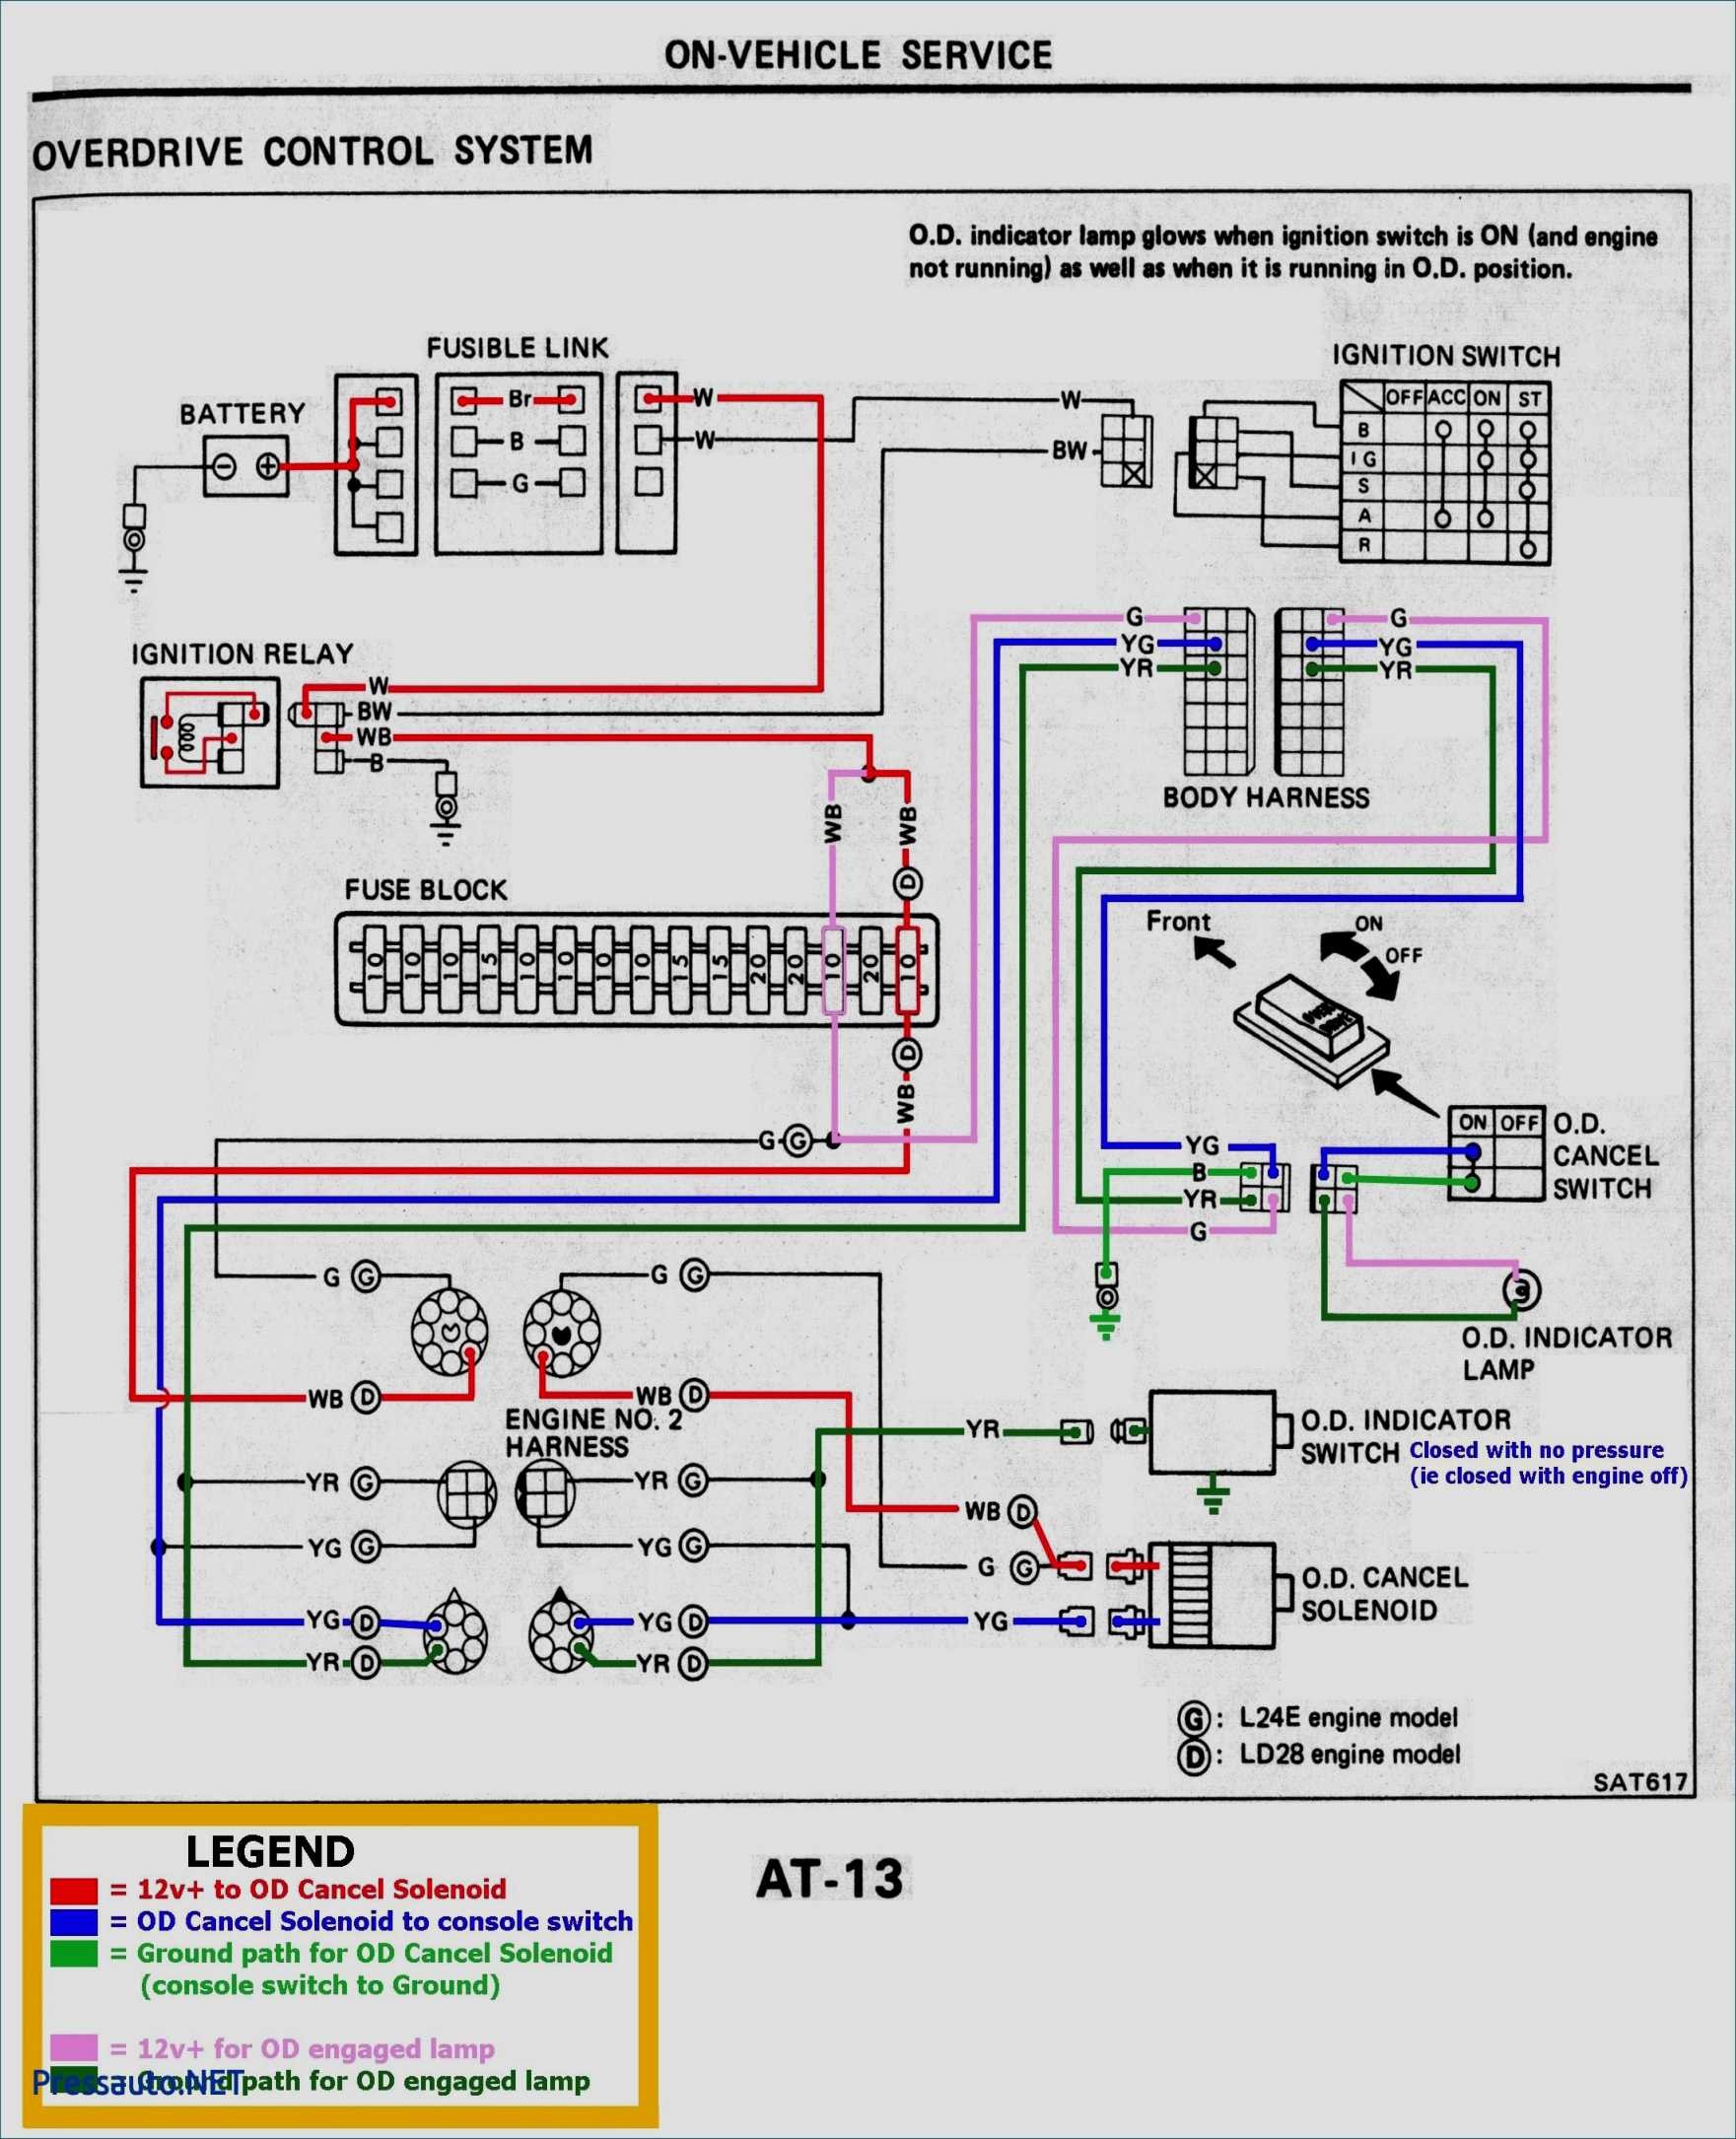 Power Window Relay Diagram Audi A4 Window Wiring Diagram Wiring Diagram toolbox Of Power Window Relay Diagram